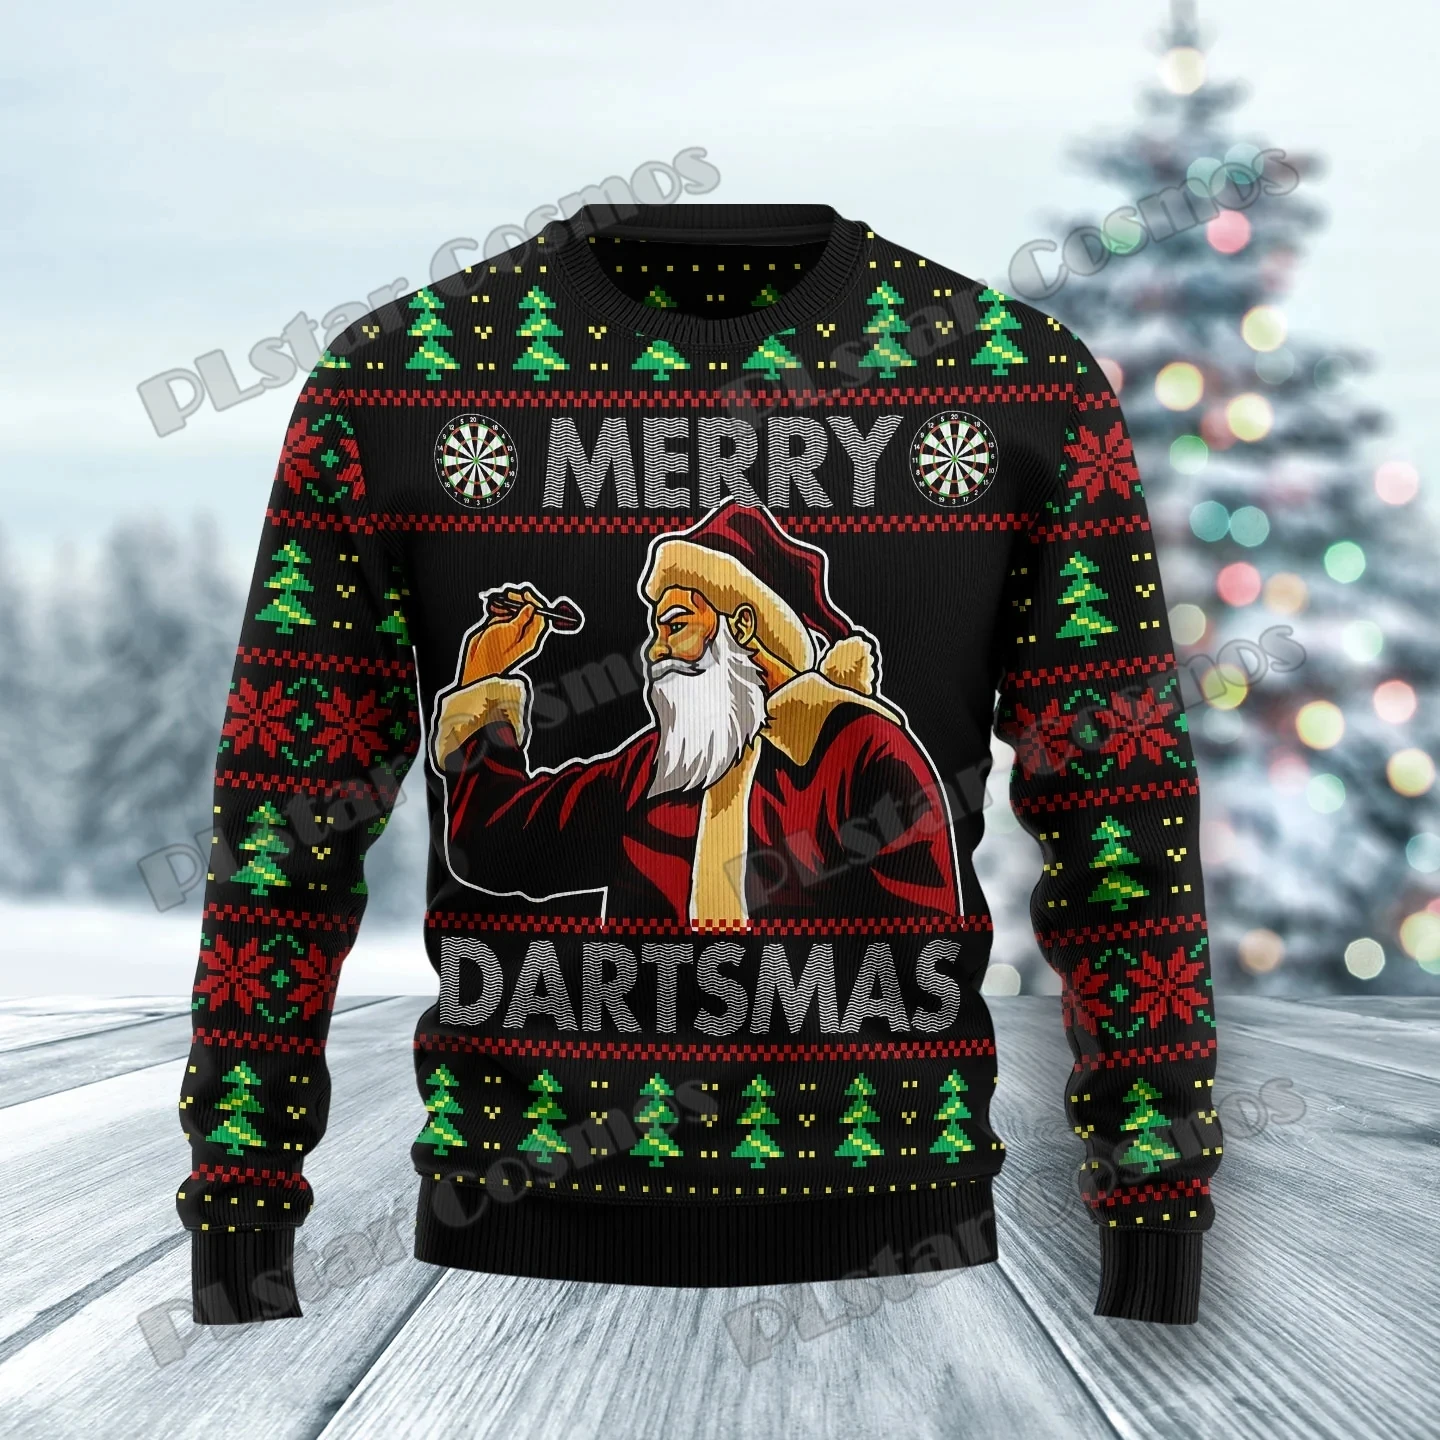 

PLstar Cosmos Santa Claus Merry Dartsmas 3D Printed Men's Ugly Christmas Sweater Winter Unisex Casual Knitwear Pullover MYY43